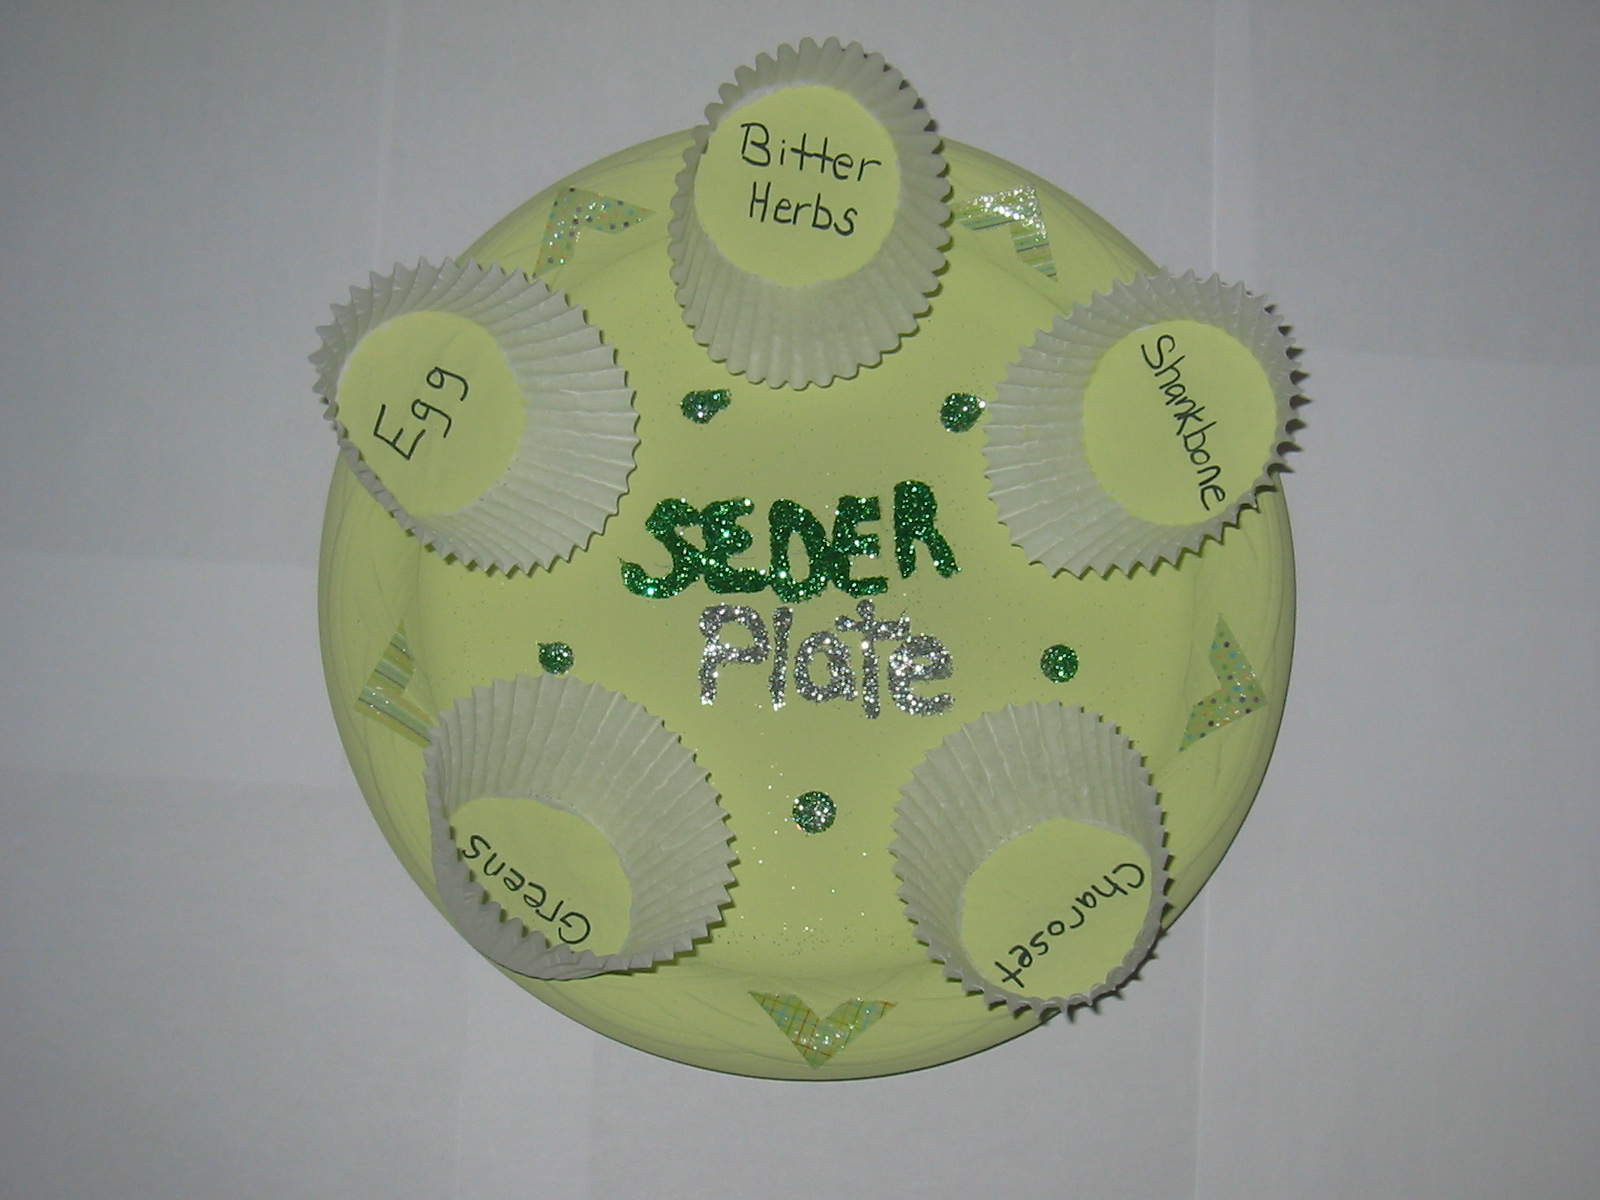 Preschool Passover Crafts
 Spring Seder Plate